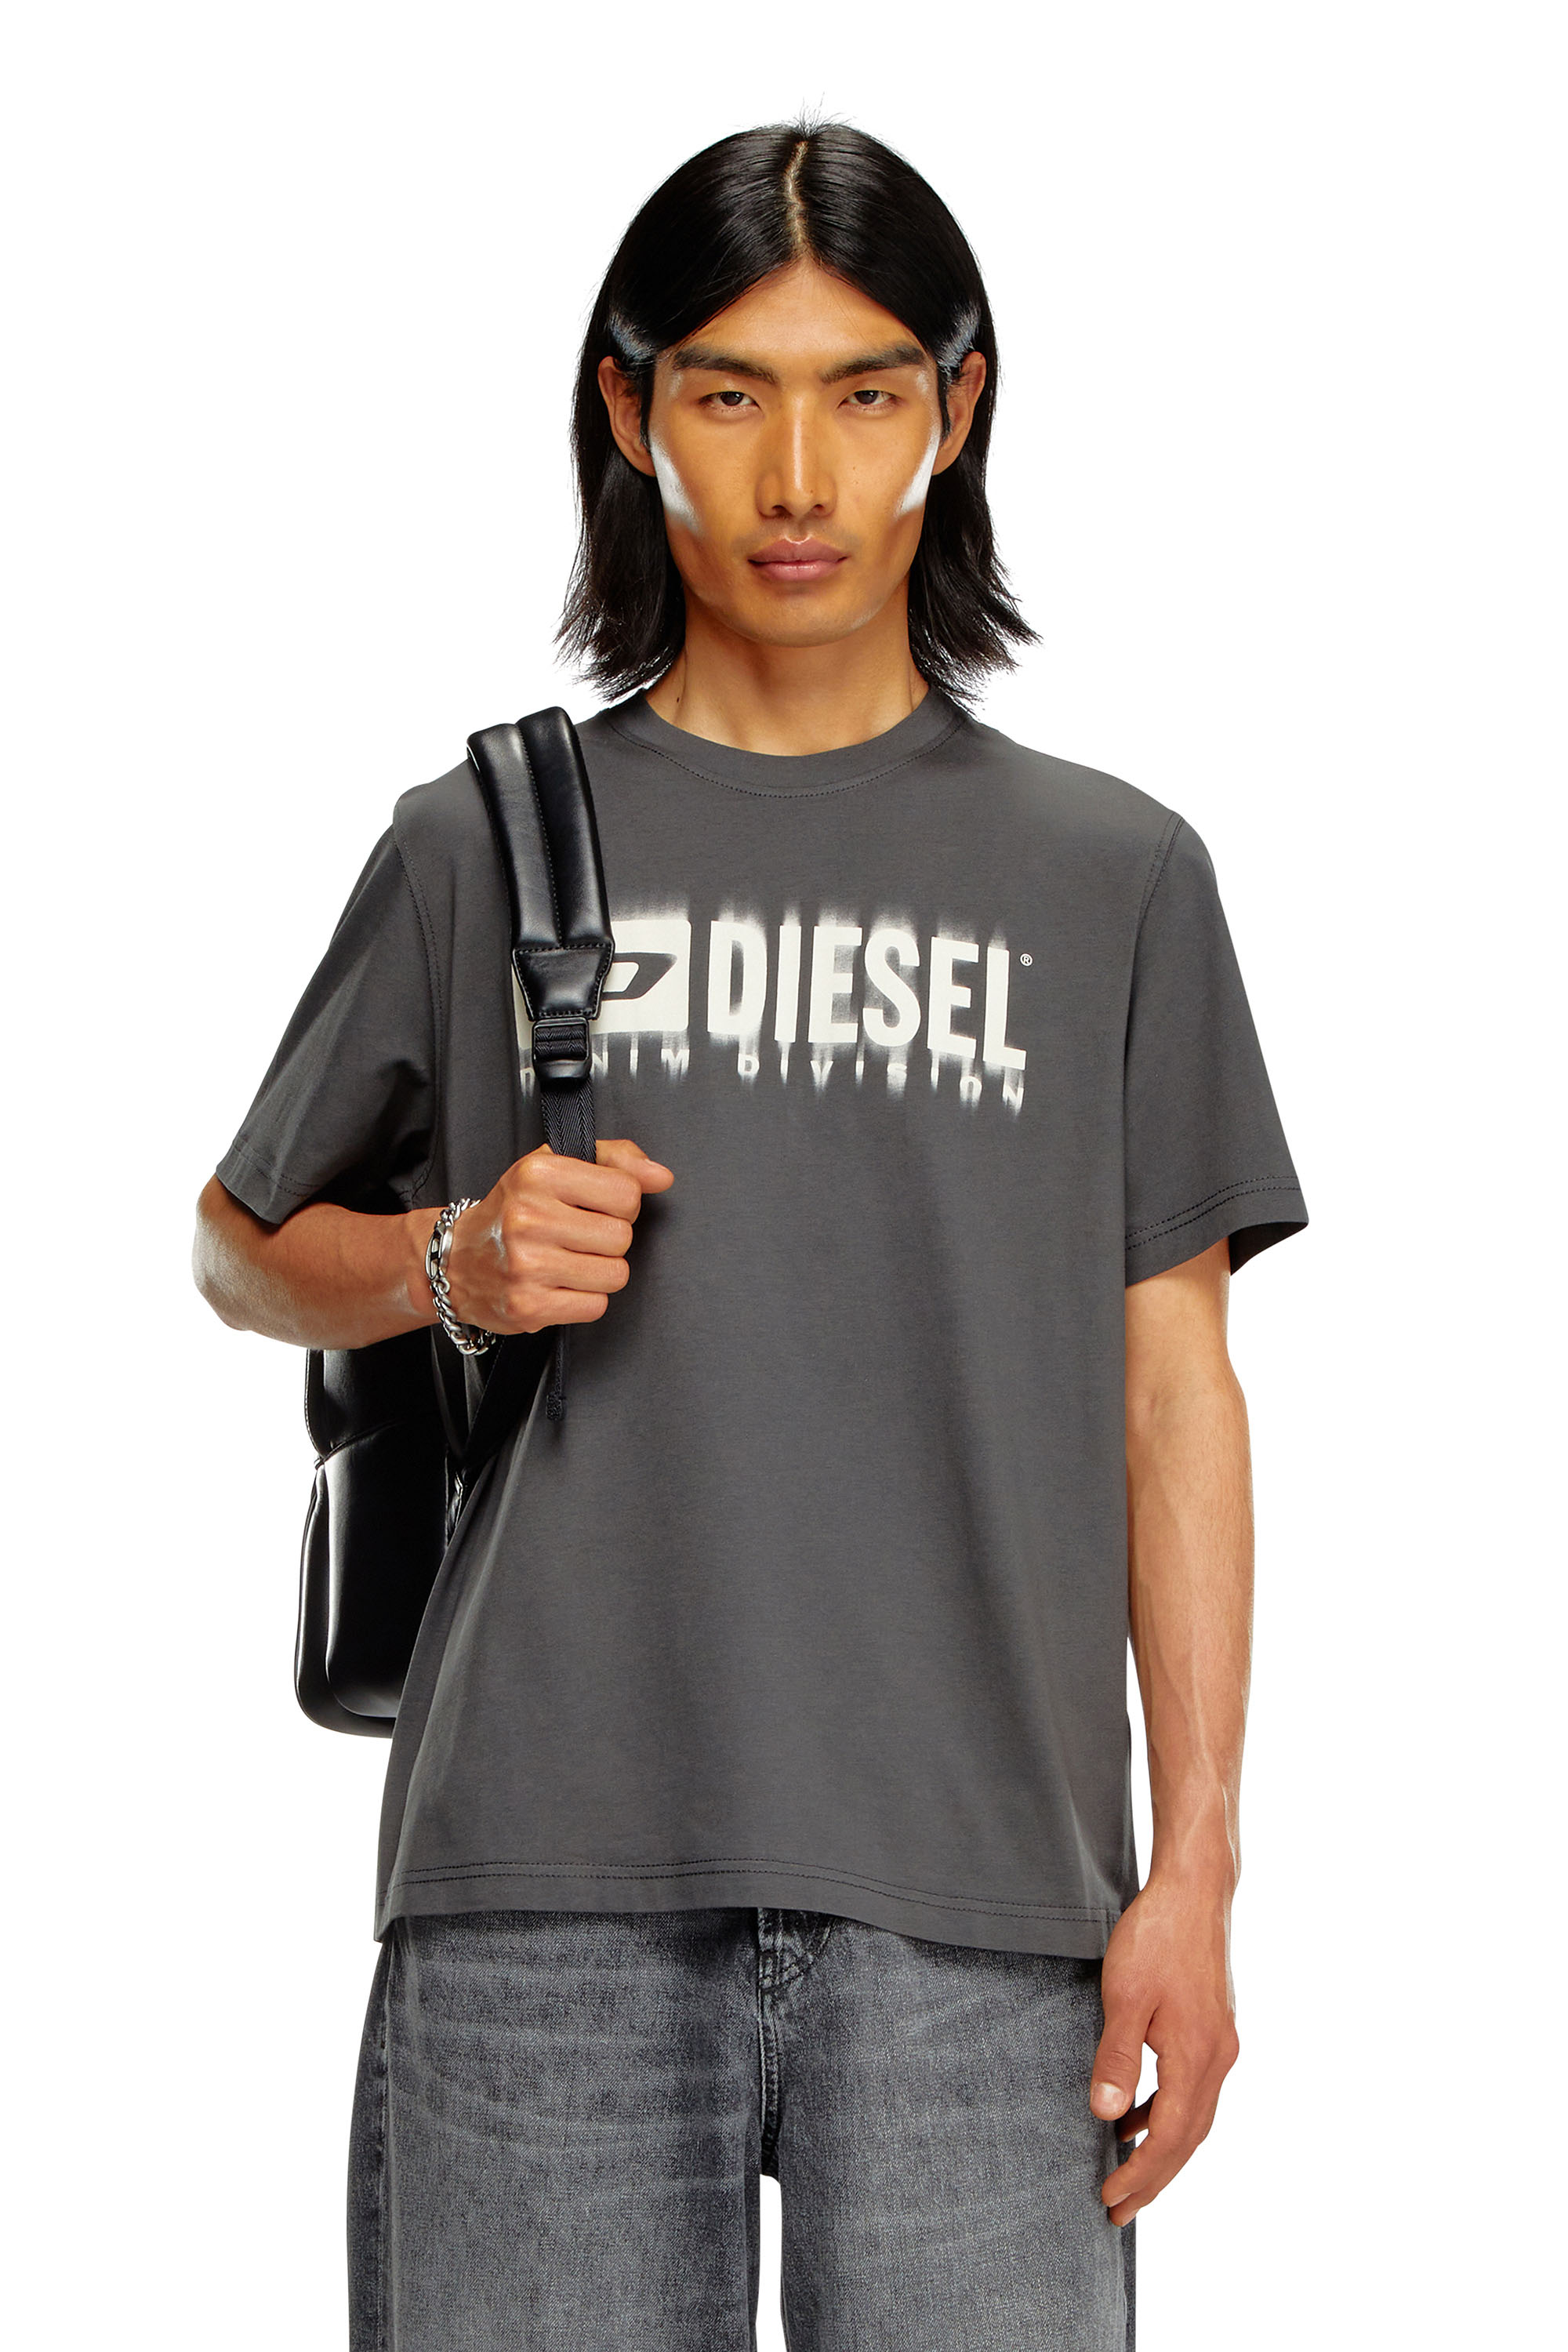 Diesel - Camiseta con logotipo Diesel borroso - Camisetas - Hombre - Gris